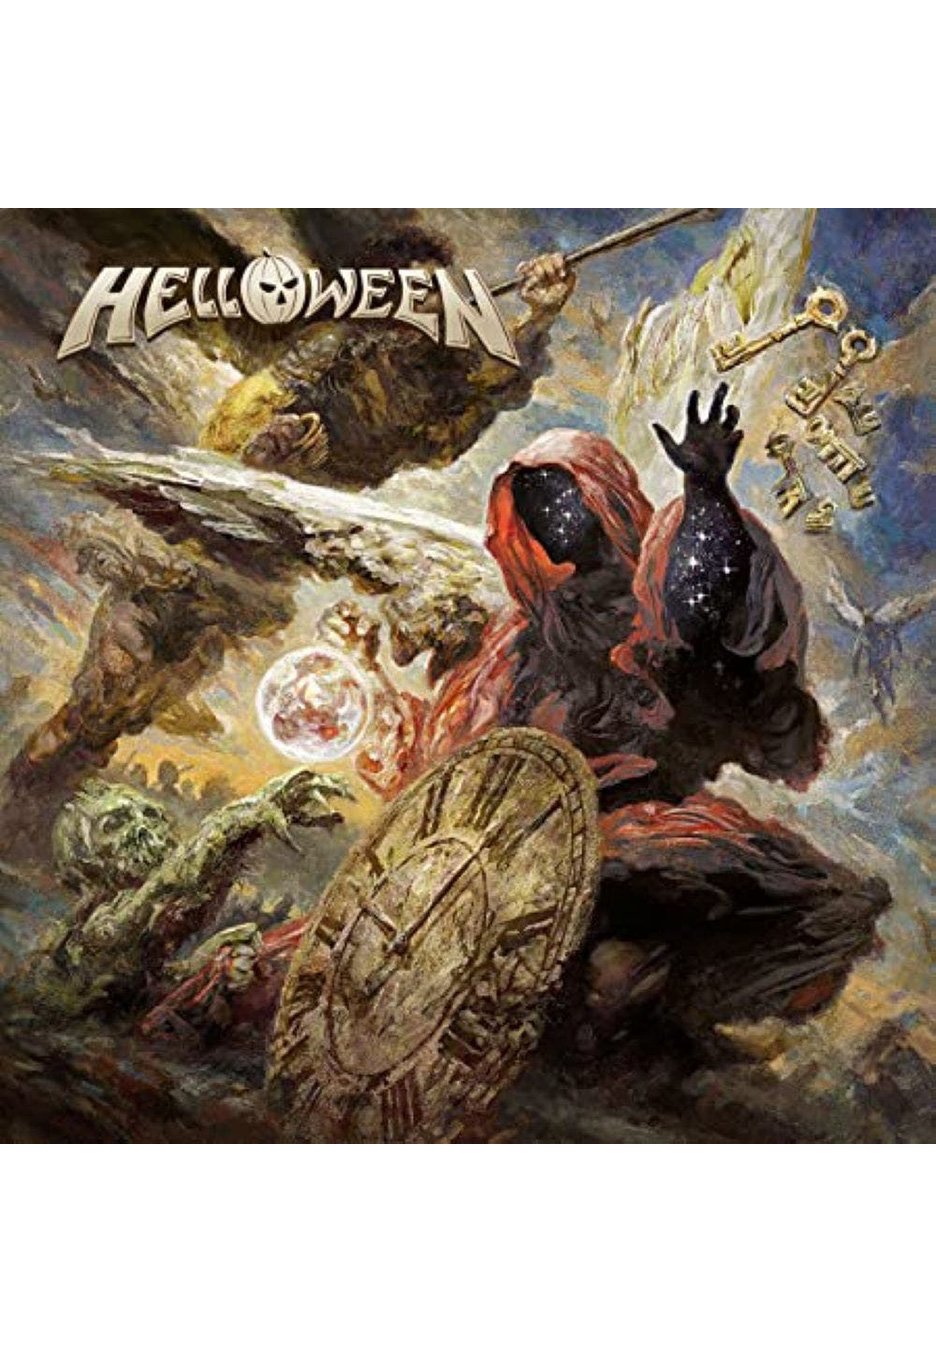 Helloween - Helloween Deluxe Edition Transparent Orange/Black - Colored Vinyl Boxset